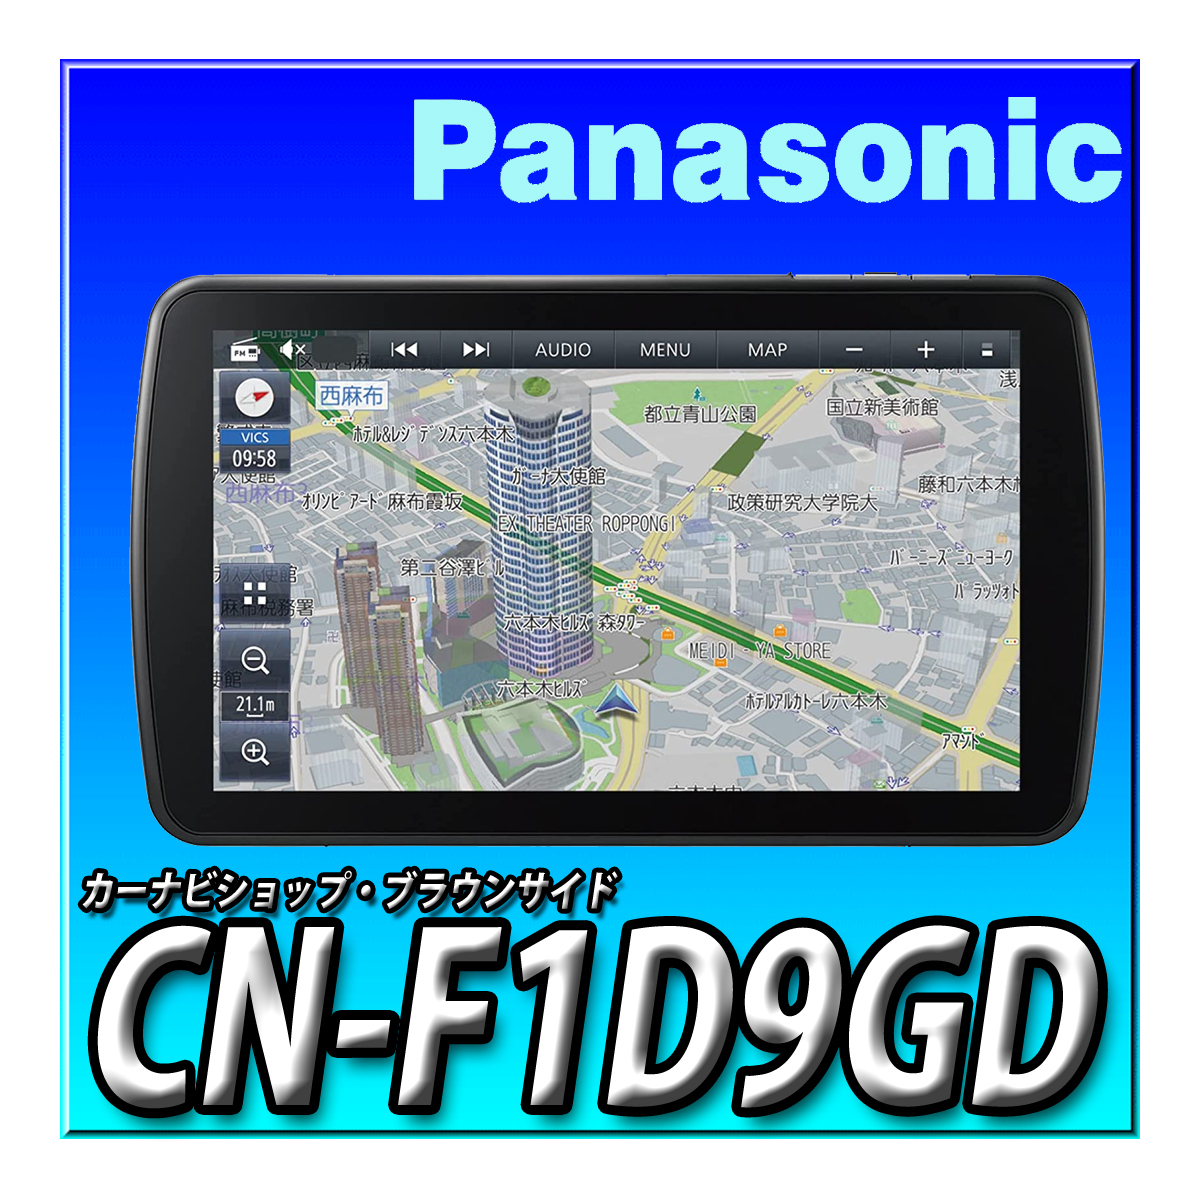 CN-F1D9GD 新品未開封 9インチフローティングナビ パナソニック ストラーダ 地デジ DVD CD録音 Bluetooth ドラレコ連携も可能 カーナビの画像1